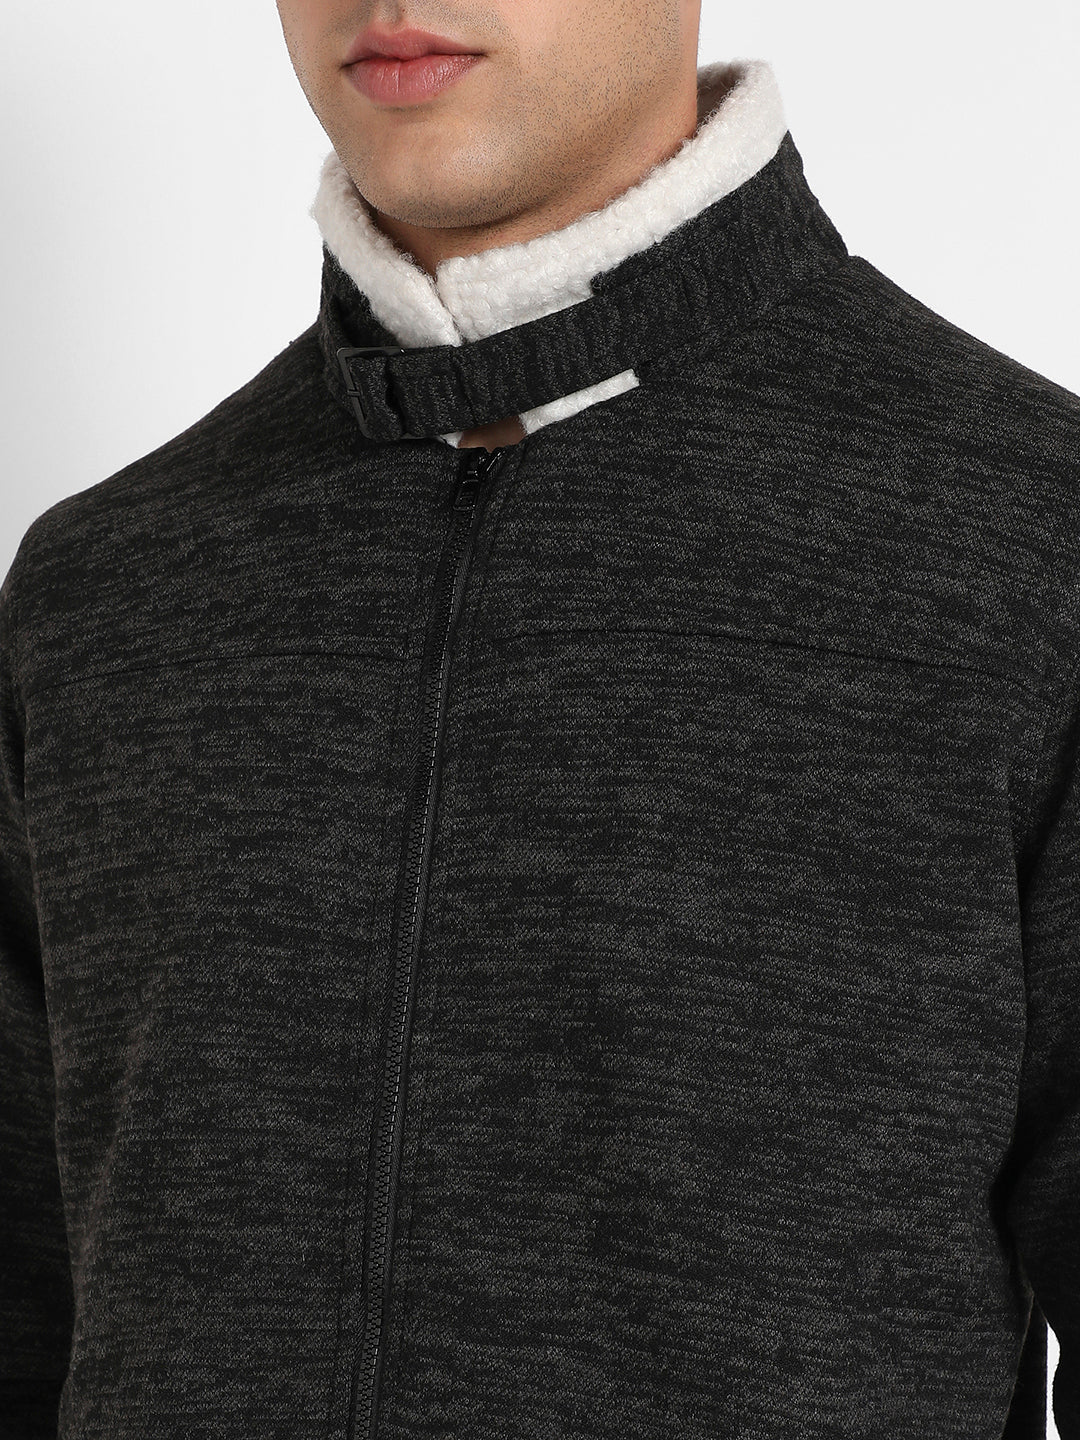 Men's Charcoal Grey Heathered Jacket With Fleece Detail